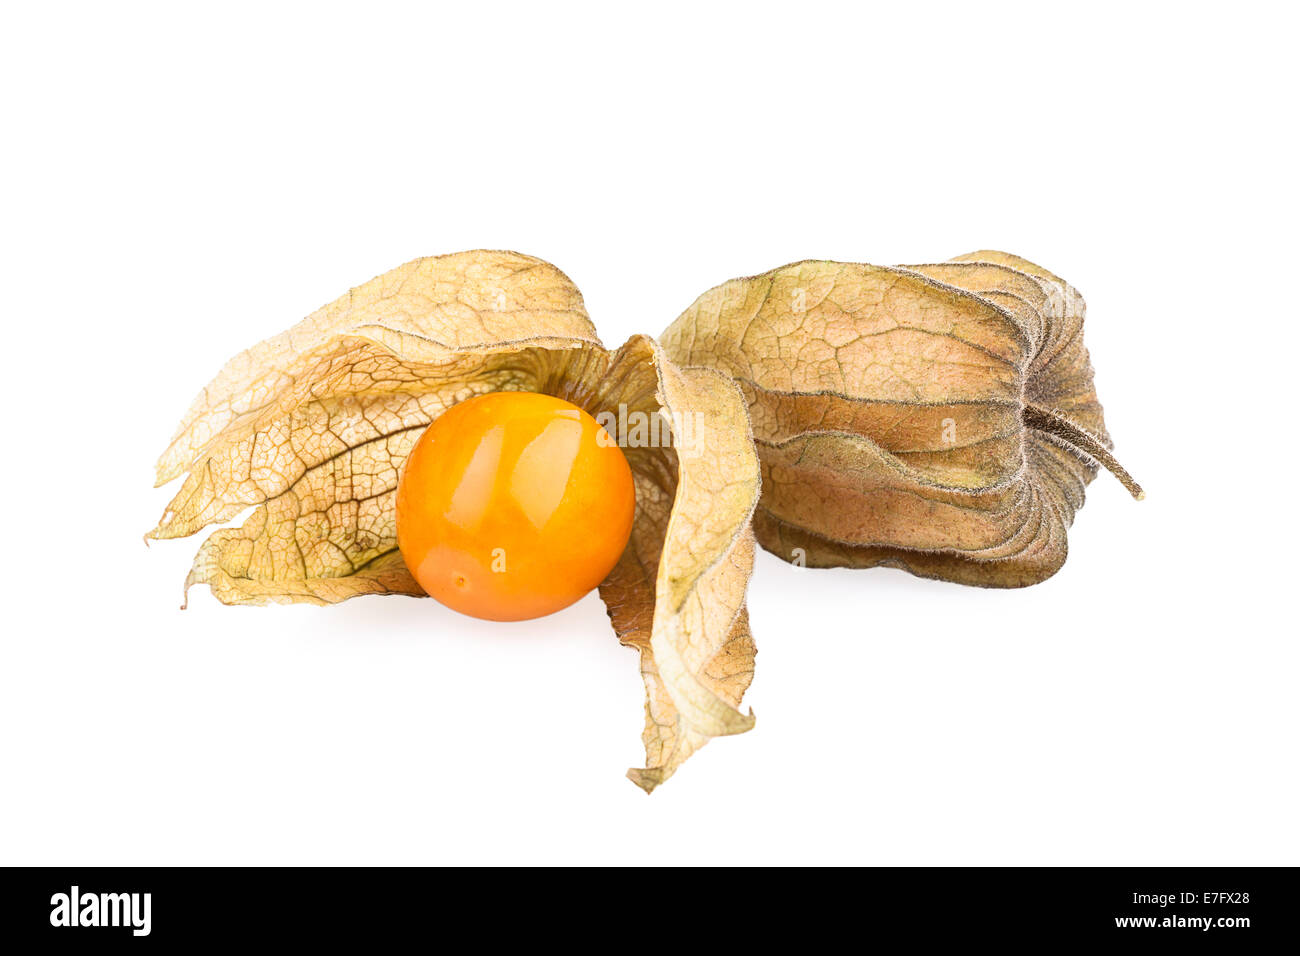 Physalis fruit (cape gooseberry) with husk Stock Photo